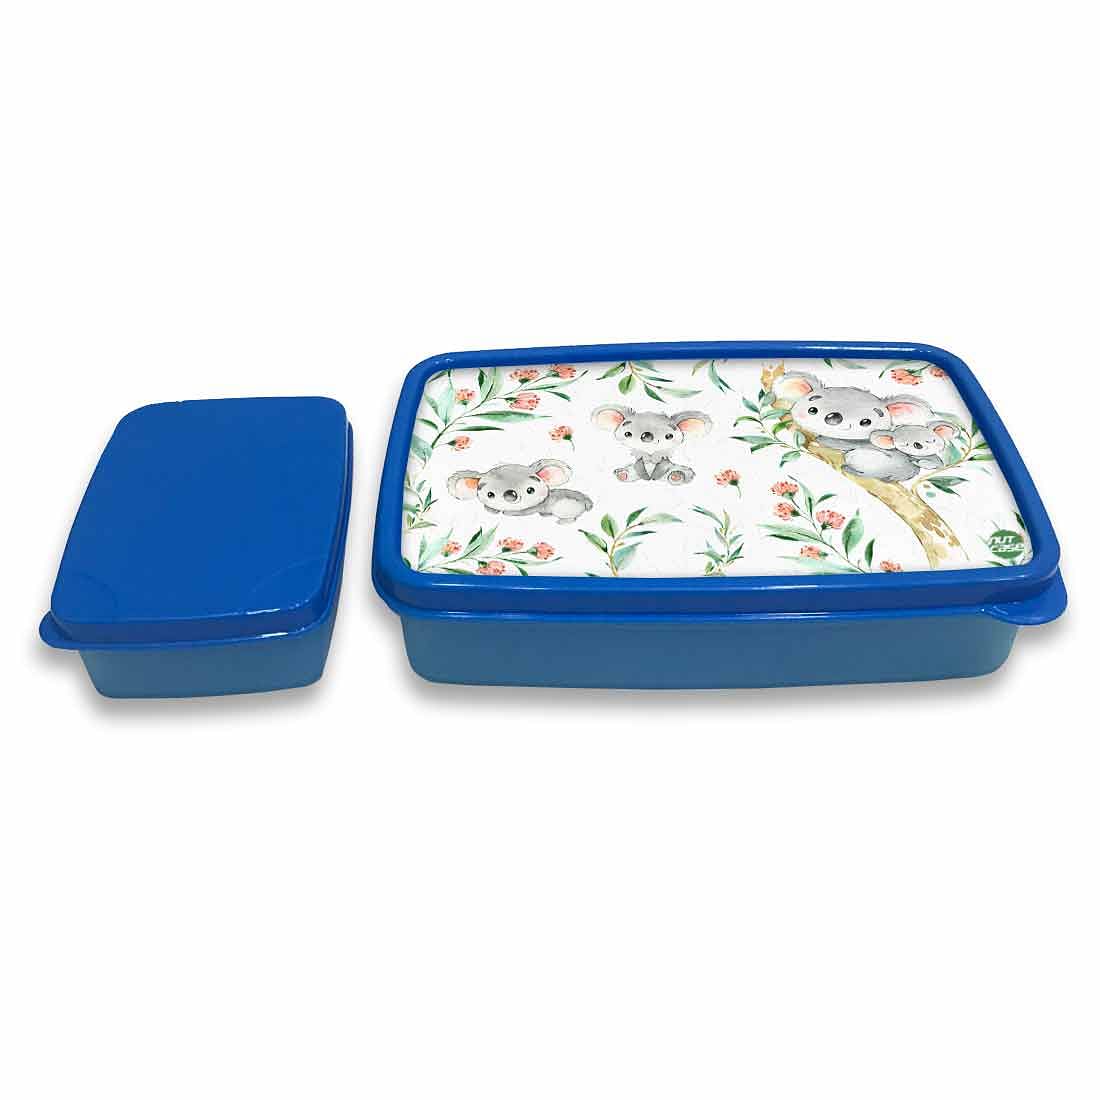 Kids Plastic Snack Box for Boys Return Gifts Birthday Party - Cute Koala Nutcase